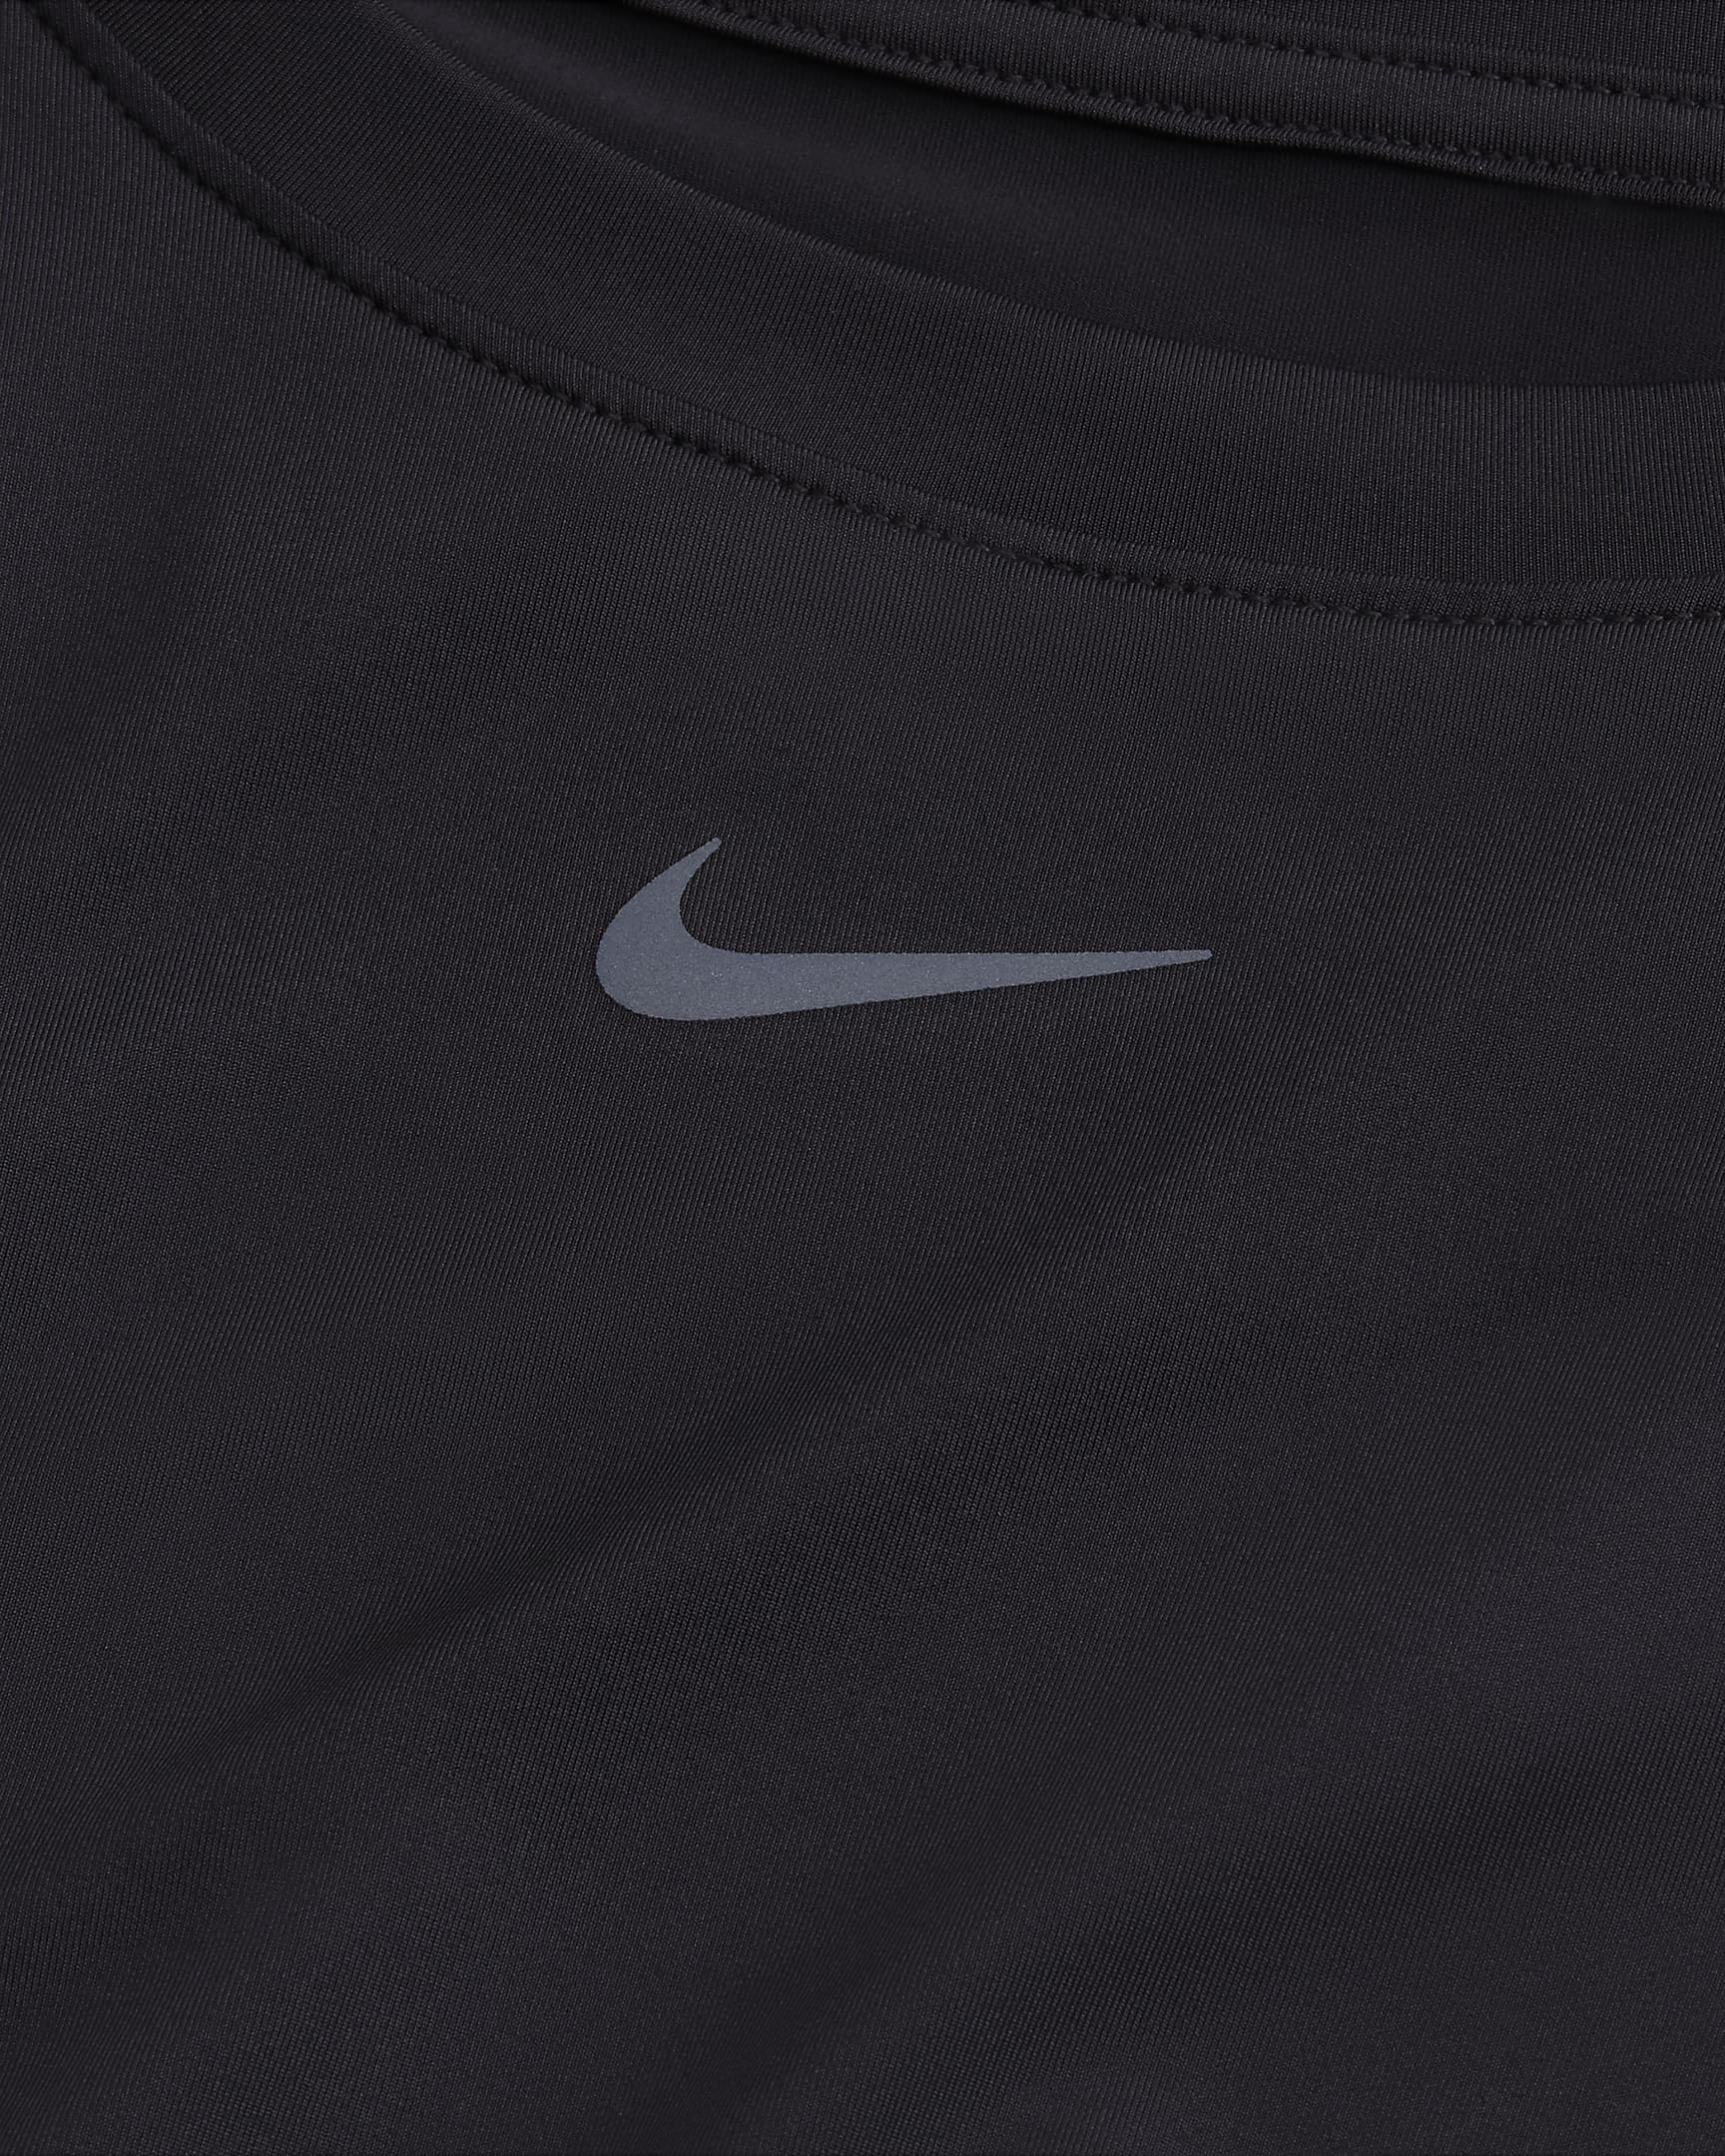 Nike One Classic Women's Dri-FIT Long-Sleeve Top - Black/Black